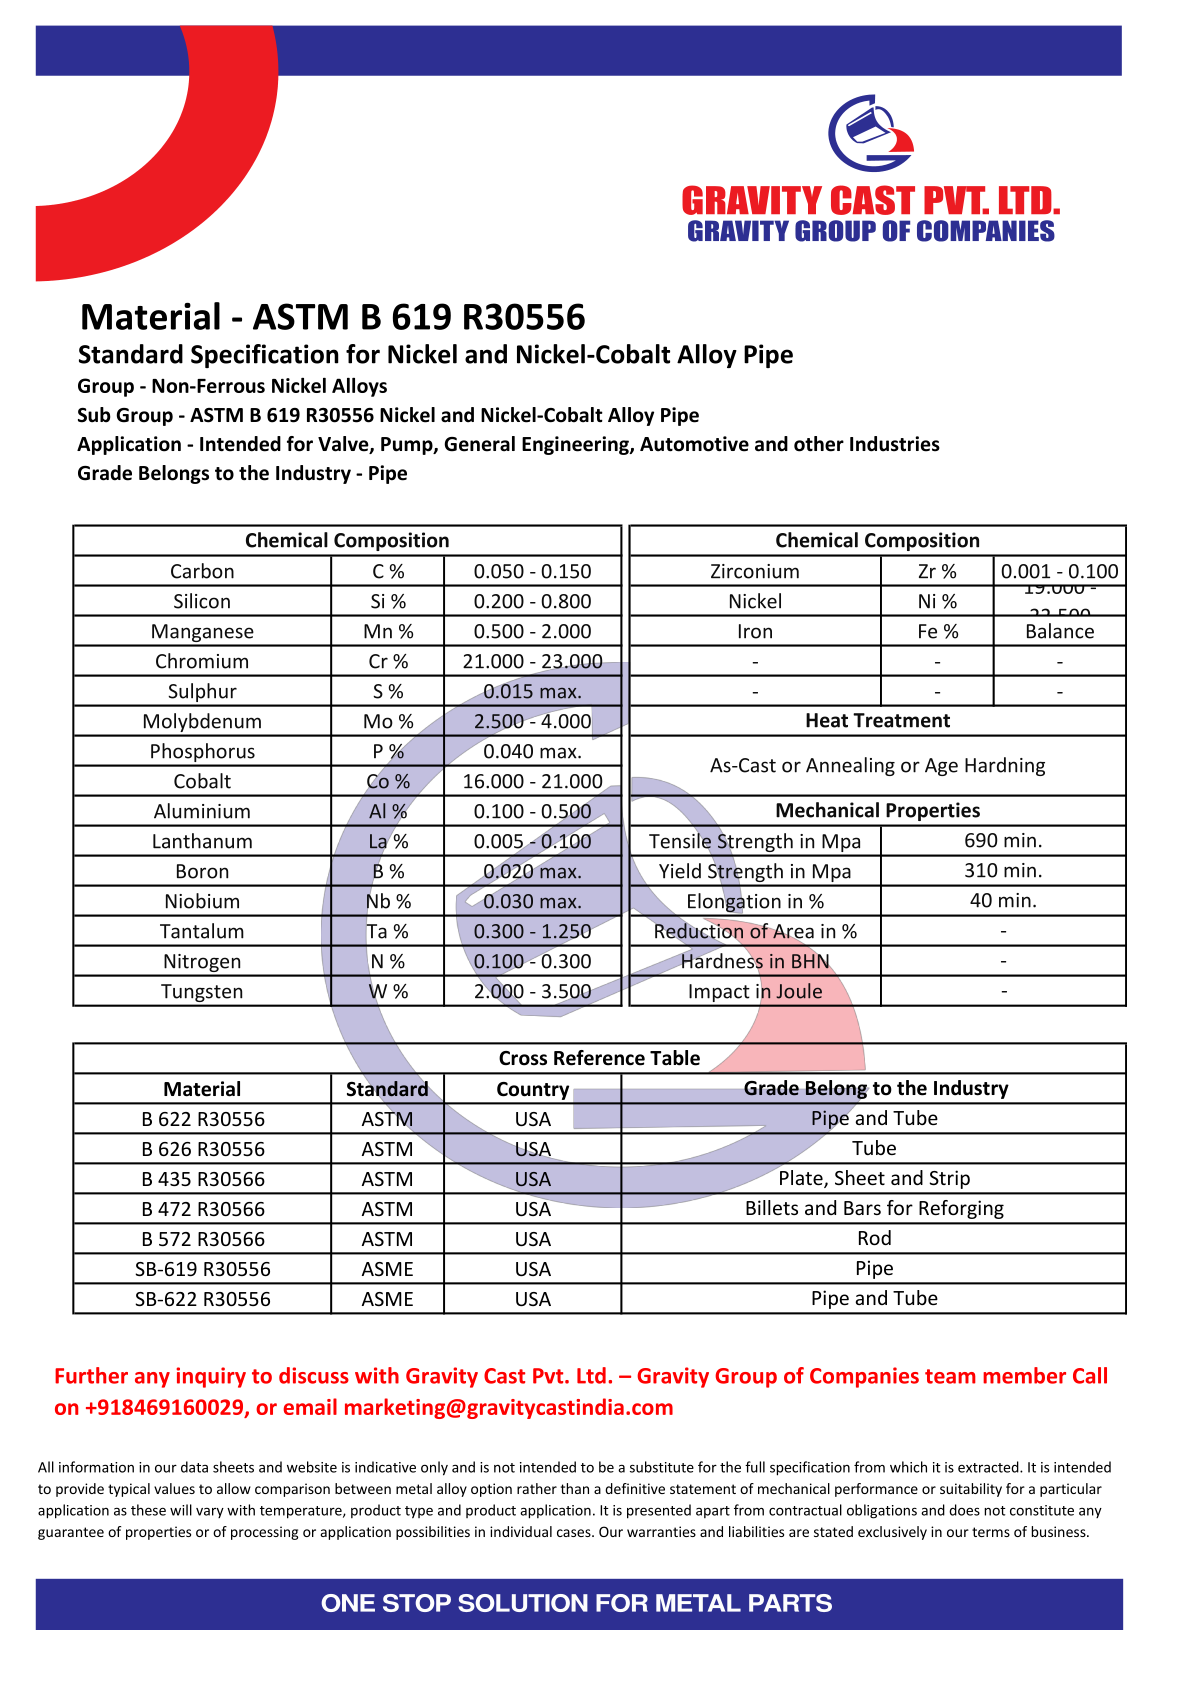 ASTM B 619 R30556.pdf